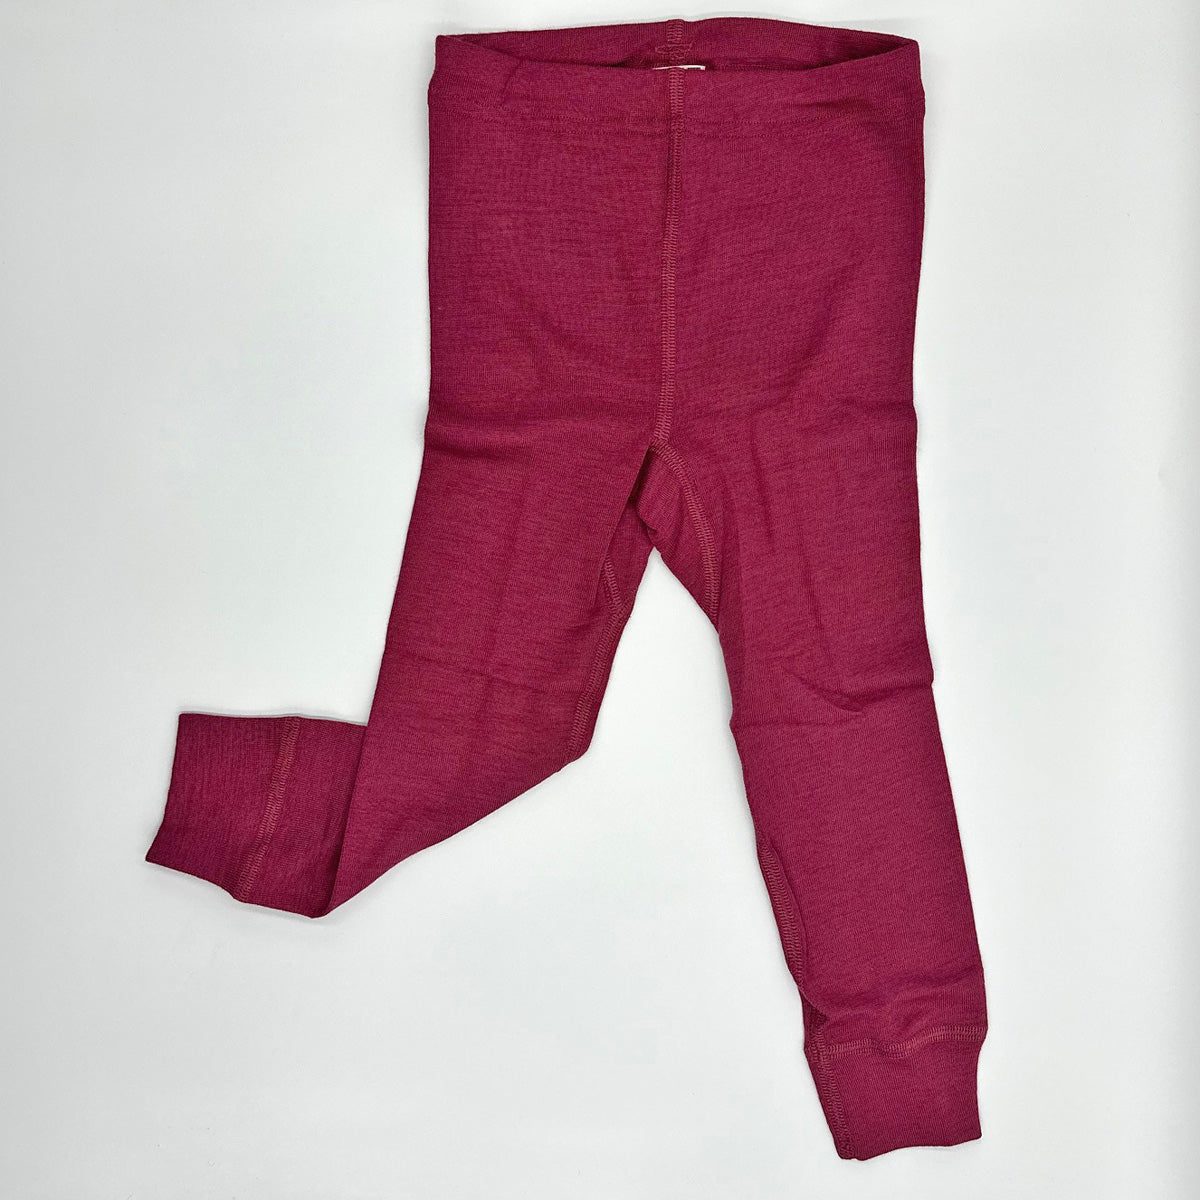 Hocosa Long Underwear Shirt with Long Sleeves in – Danish Woolen Delight